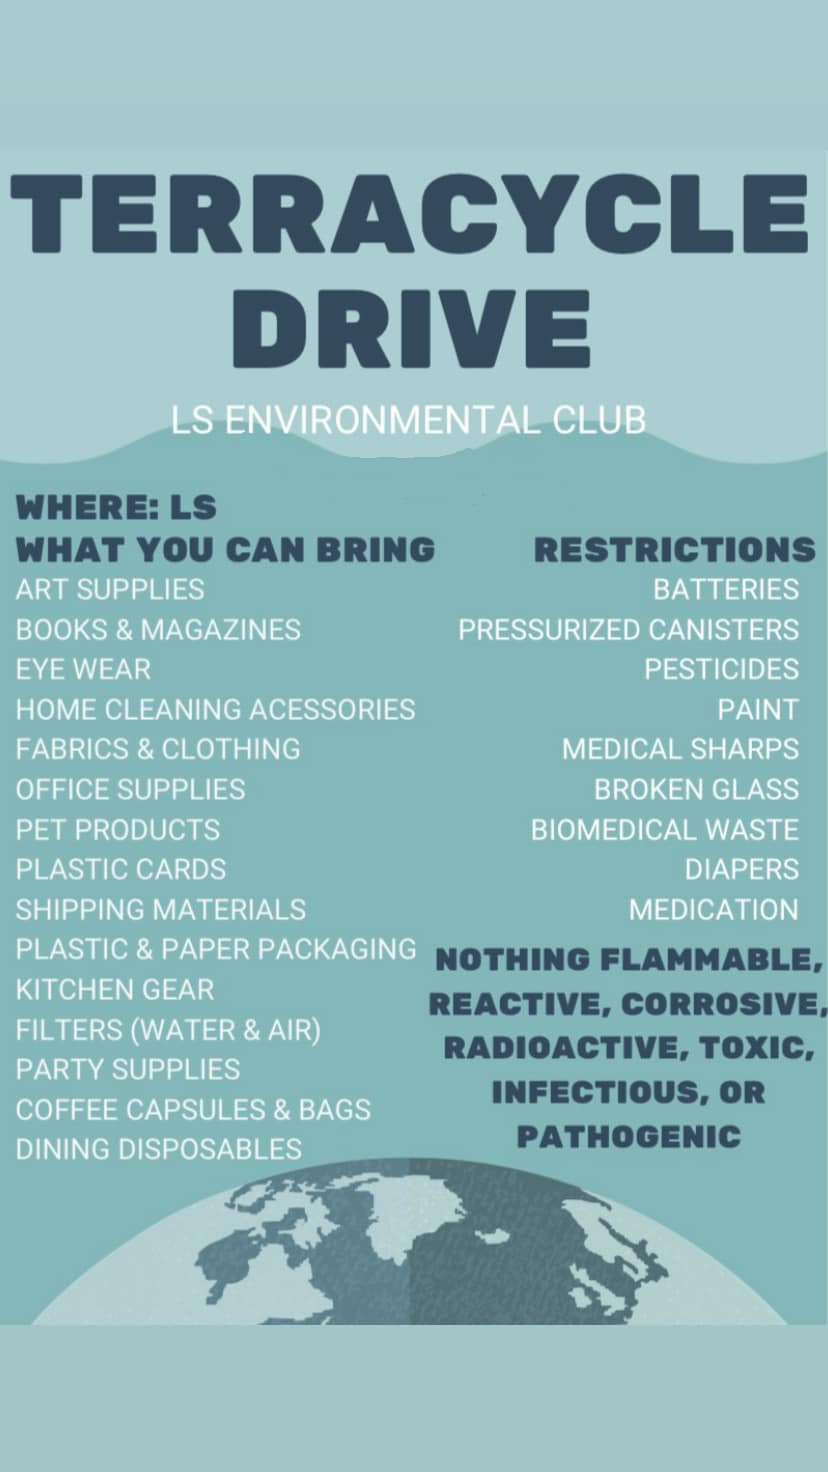 L-S Environmental Club Recycling drive Jan. 8 1-4 pm @LSRHS, Free